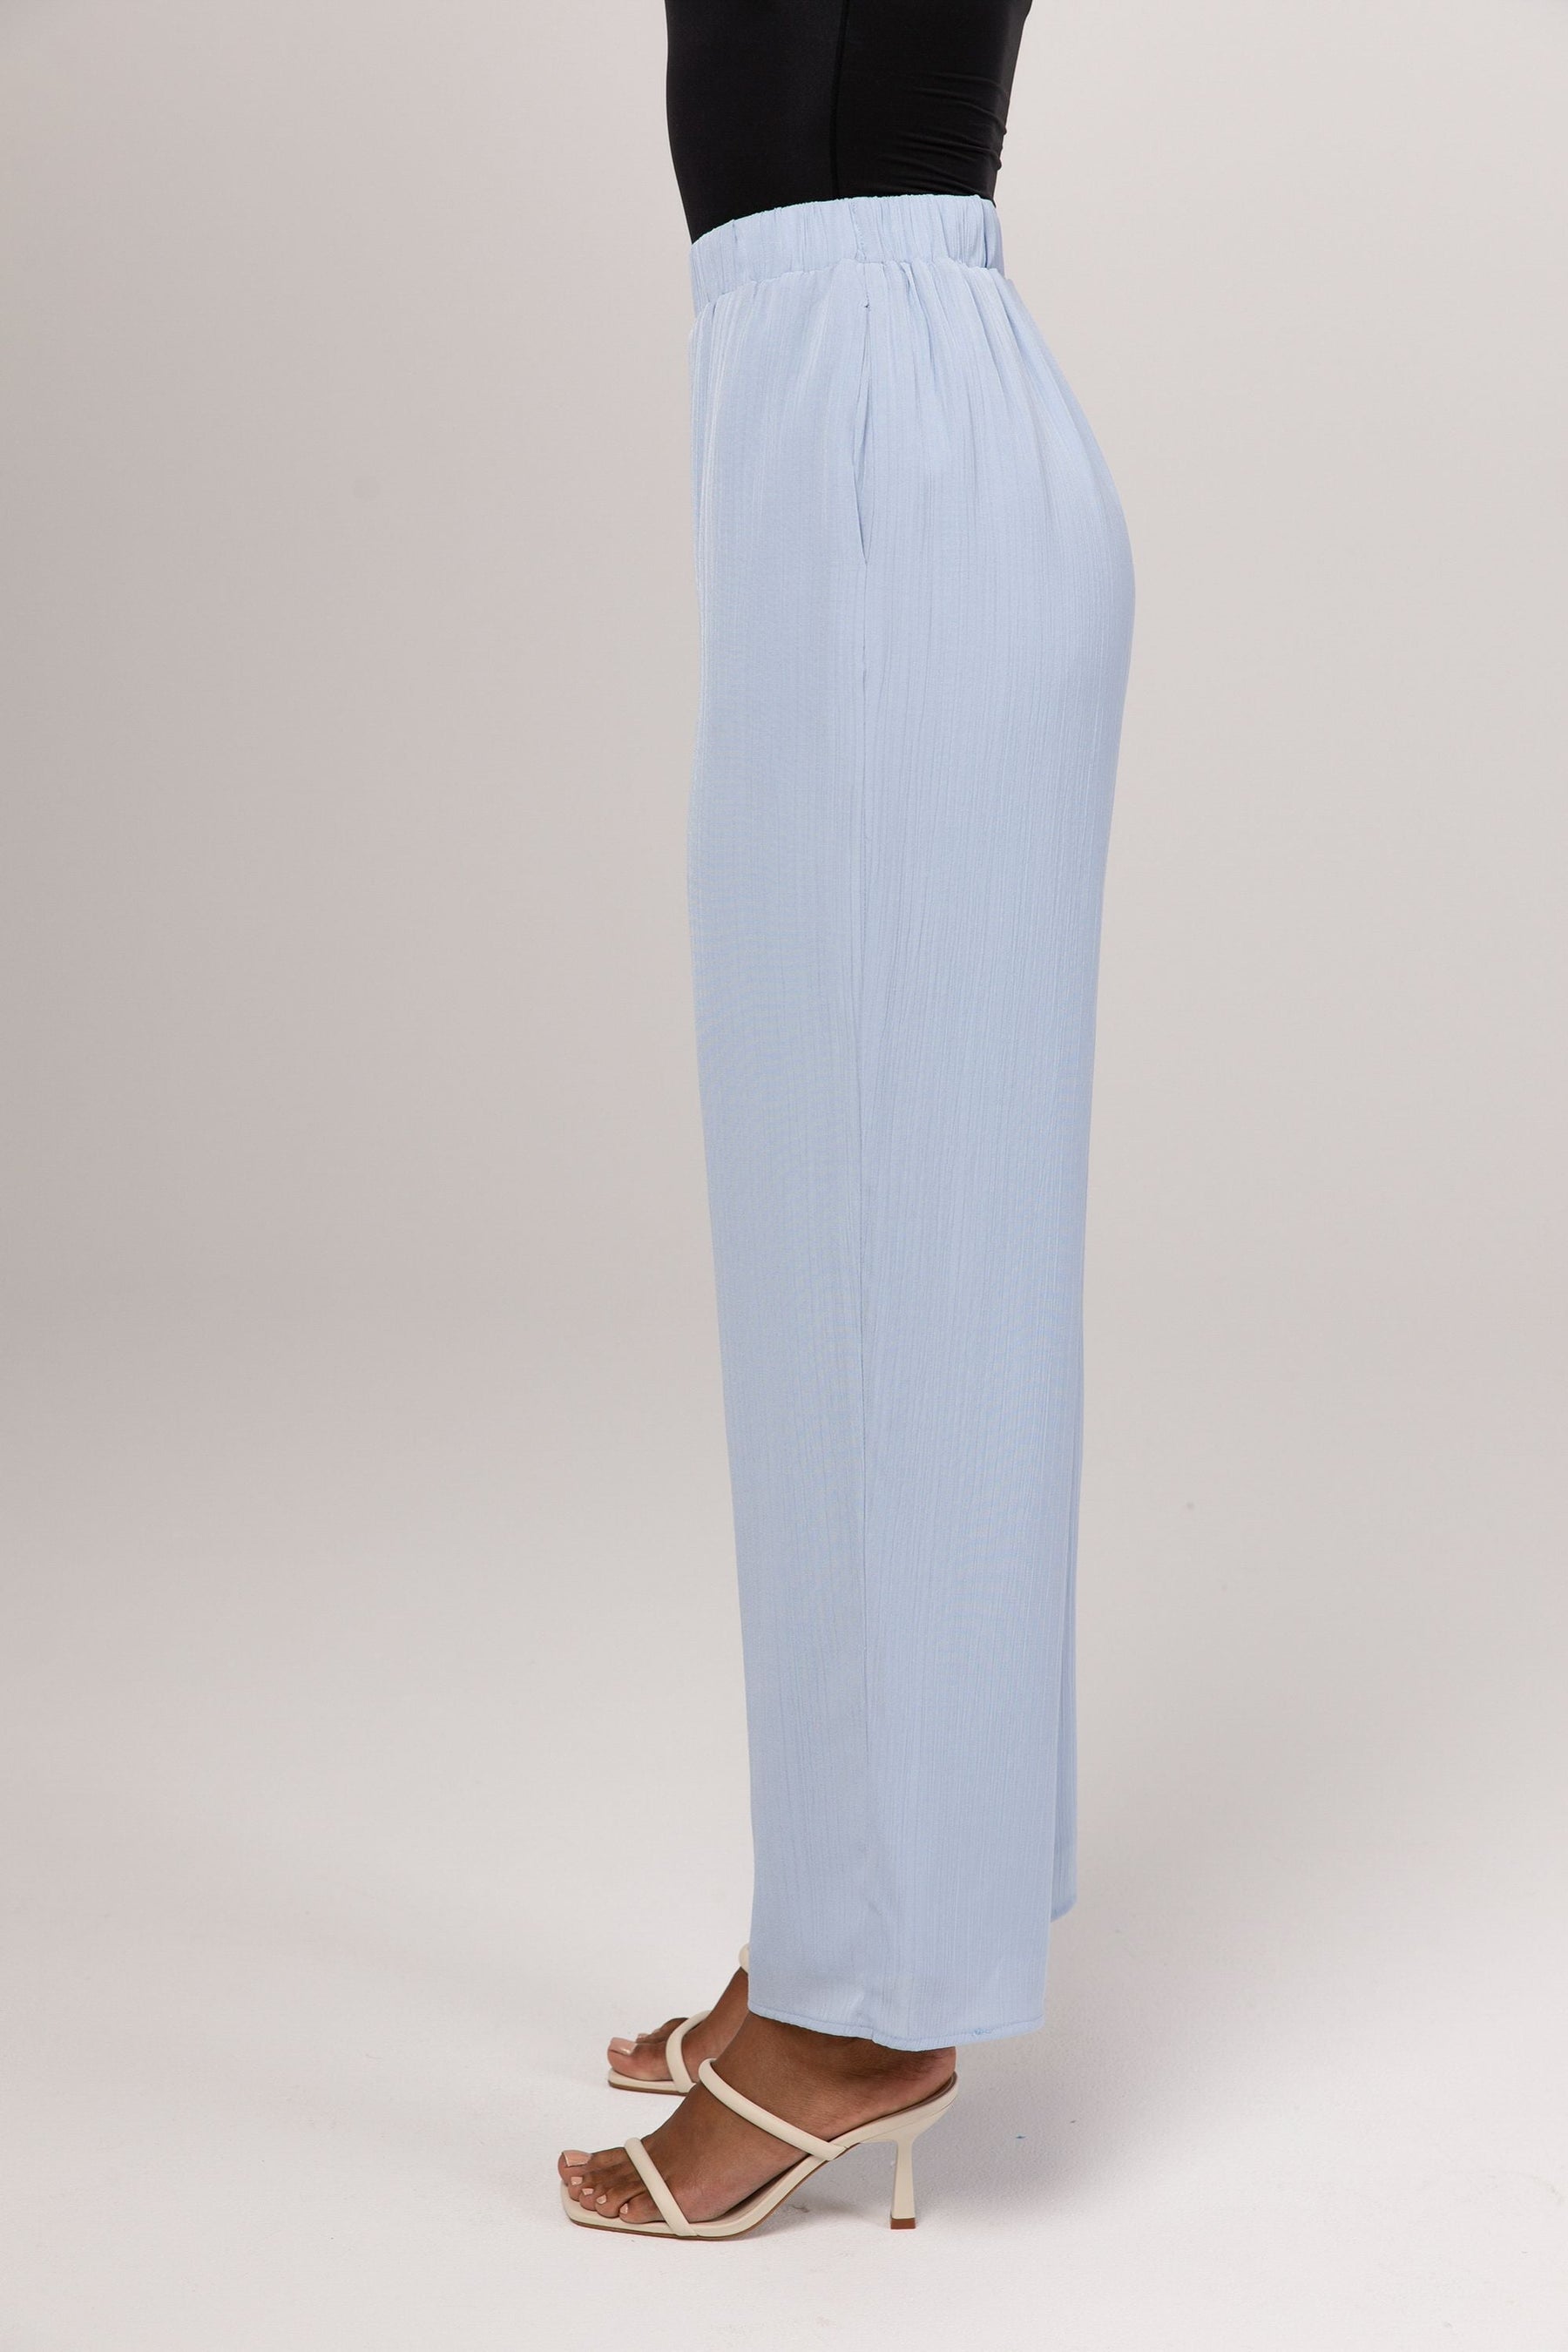 Nashwa Textured Rayon Wide Leg Pants - Powder Blue epschoolboard 